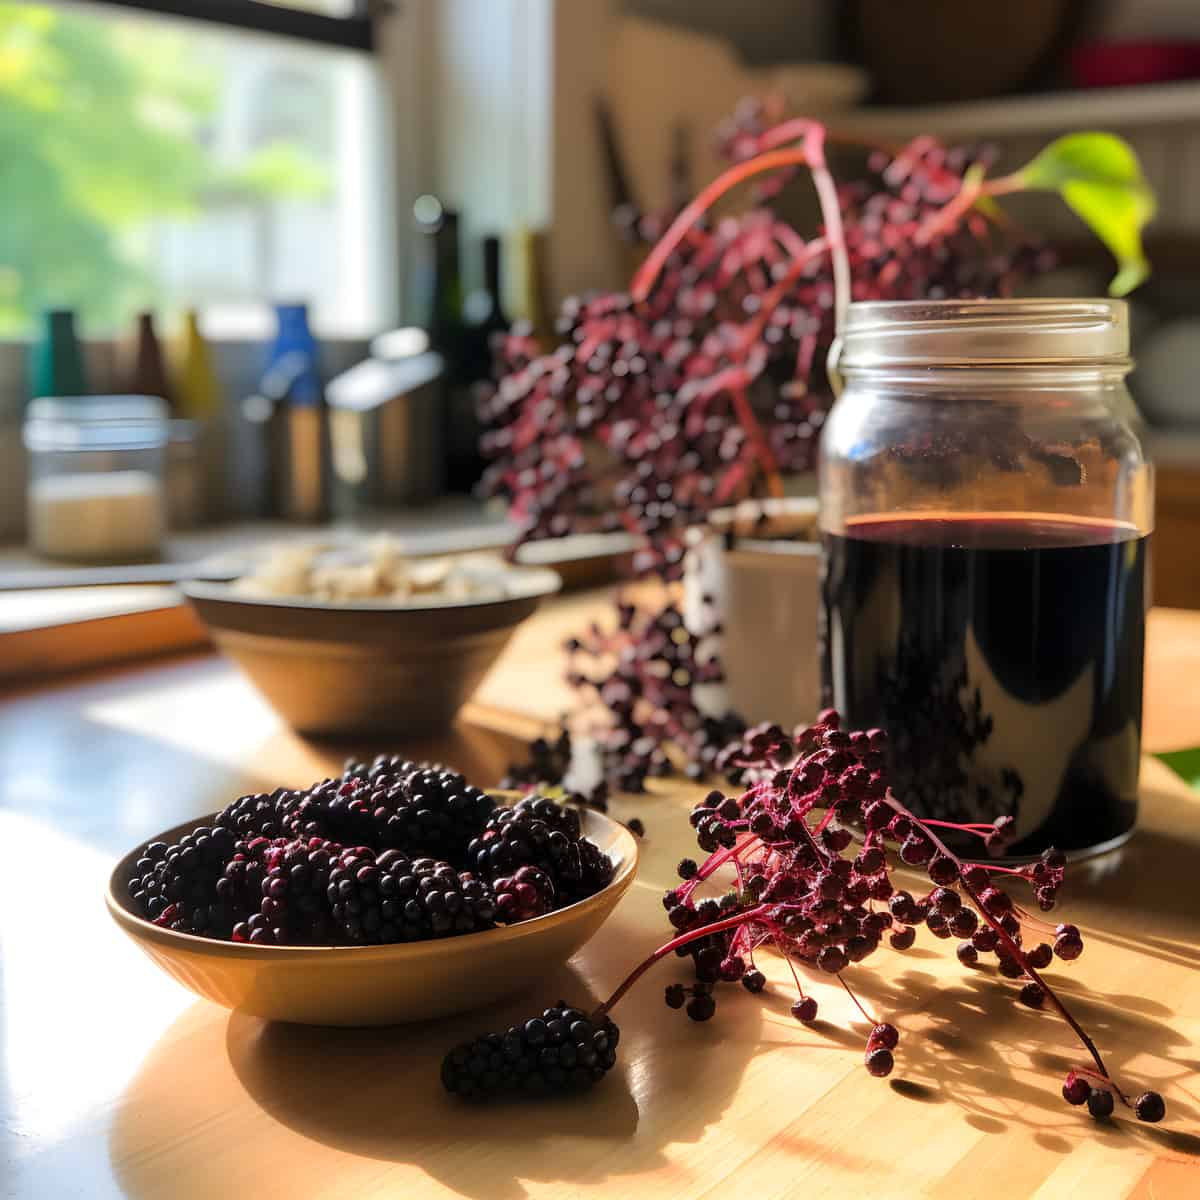 American Black Elderberries on a kitchen counter